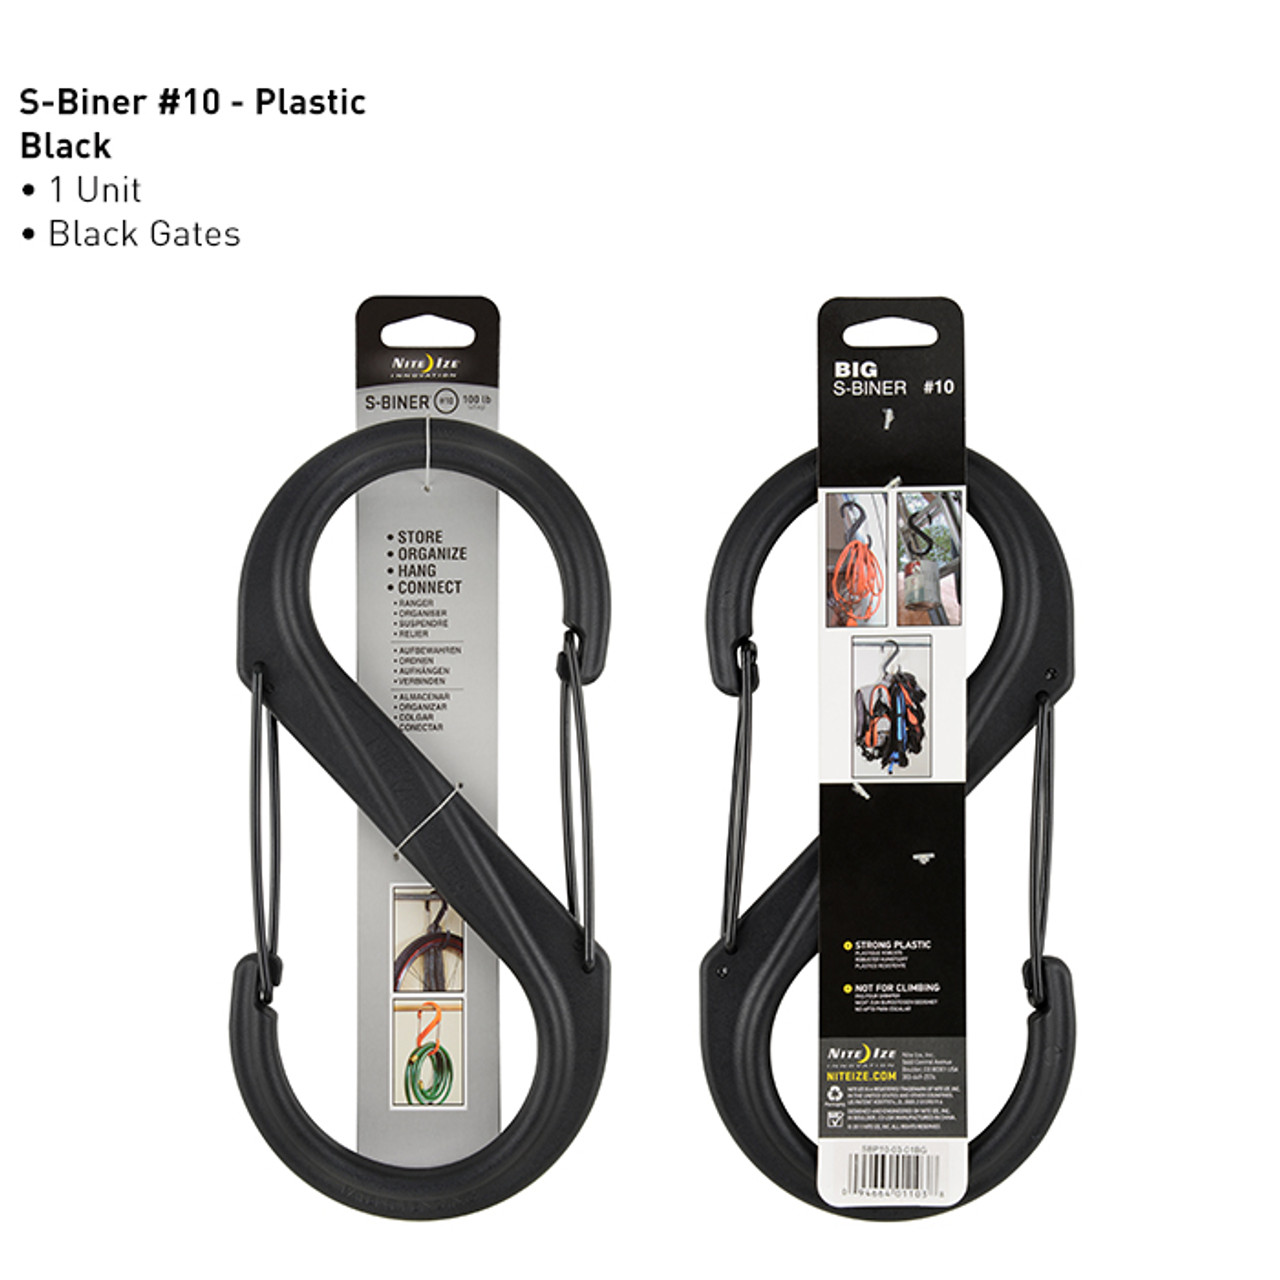 Nite Ize Plastic S-Biner, Size #10 - Black